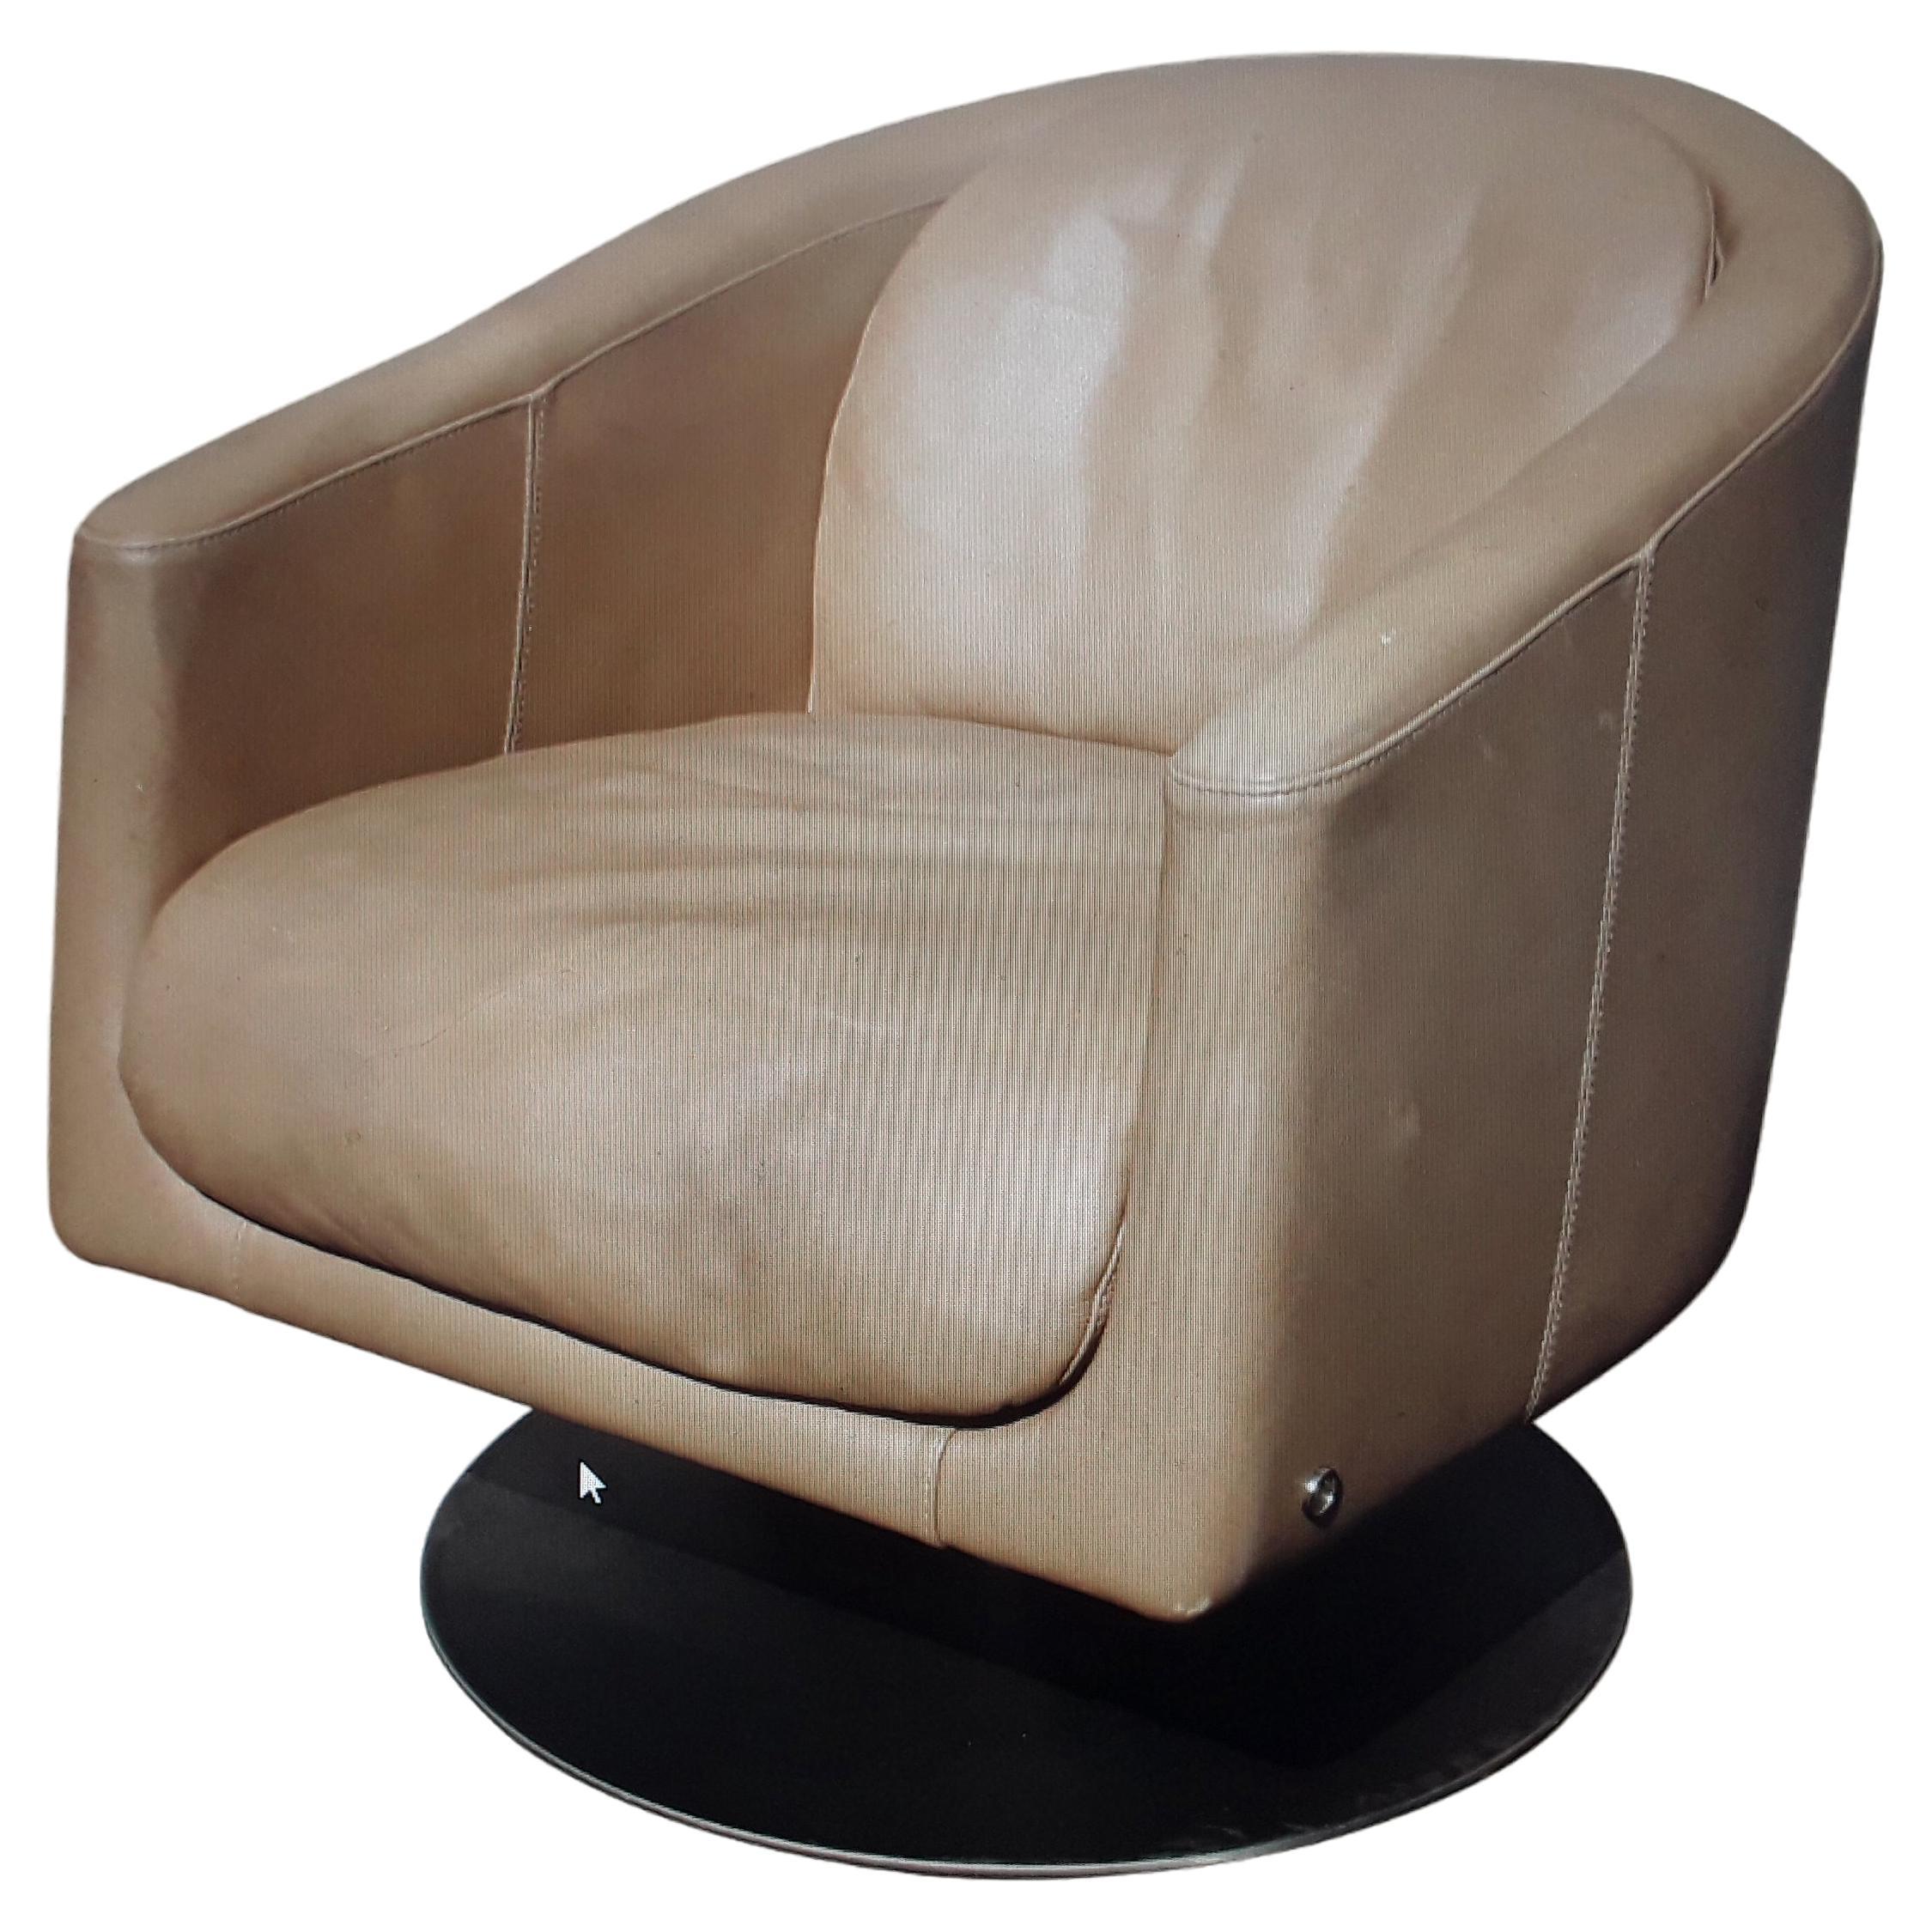 1960's Italian Art Deco style Natuzzi Leather Swivel Club Chair For Sale